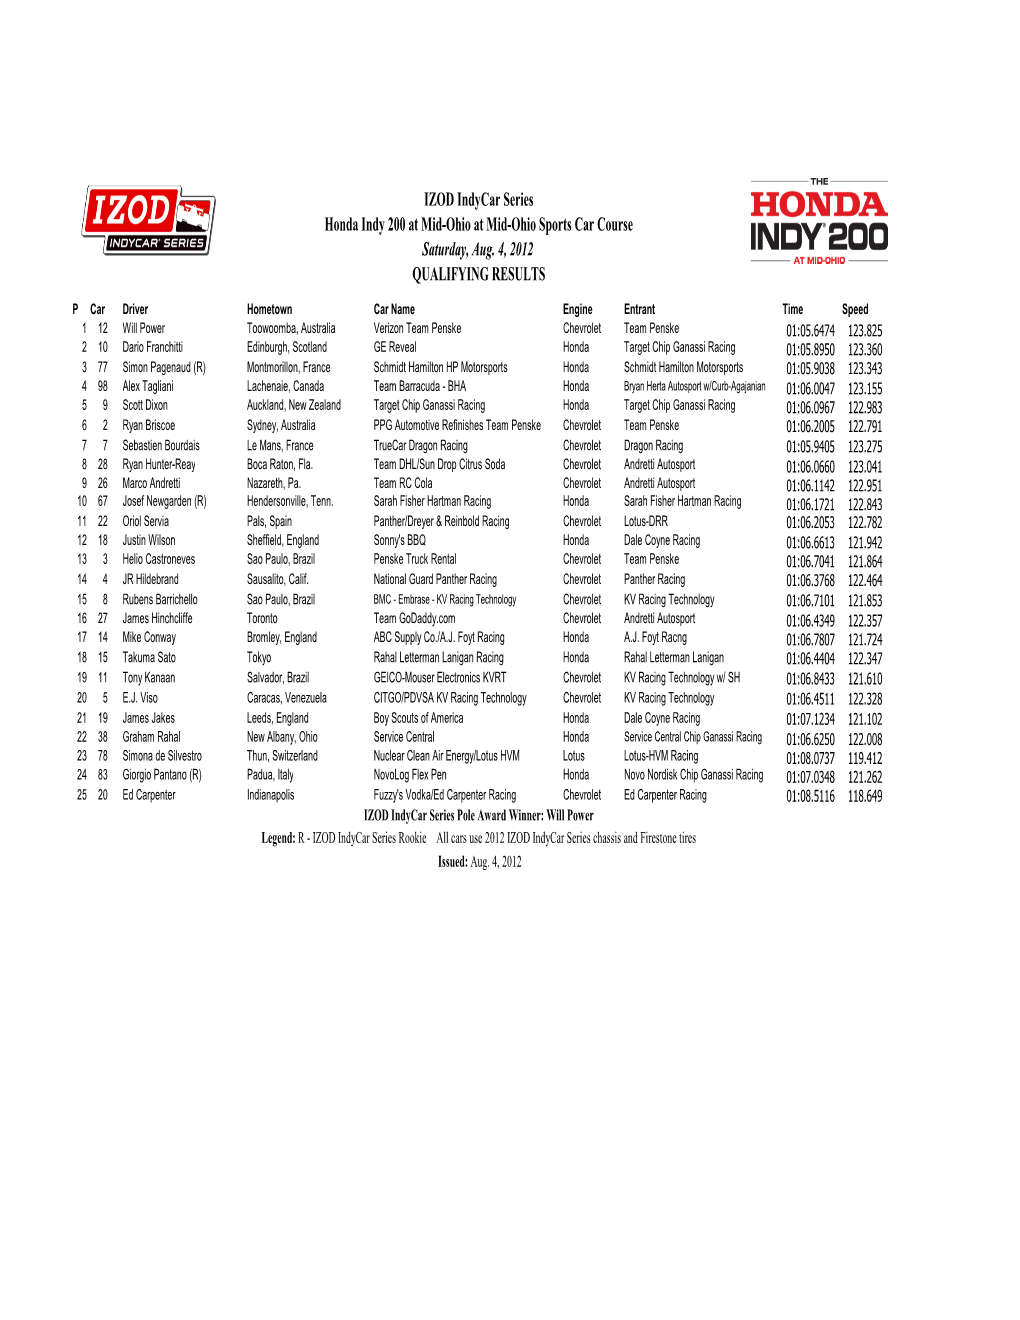 Honda Indy 200 Qual Results